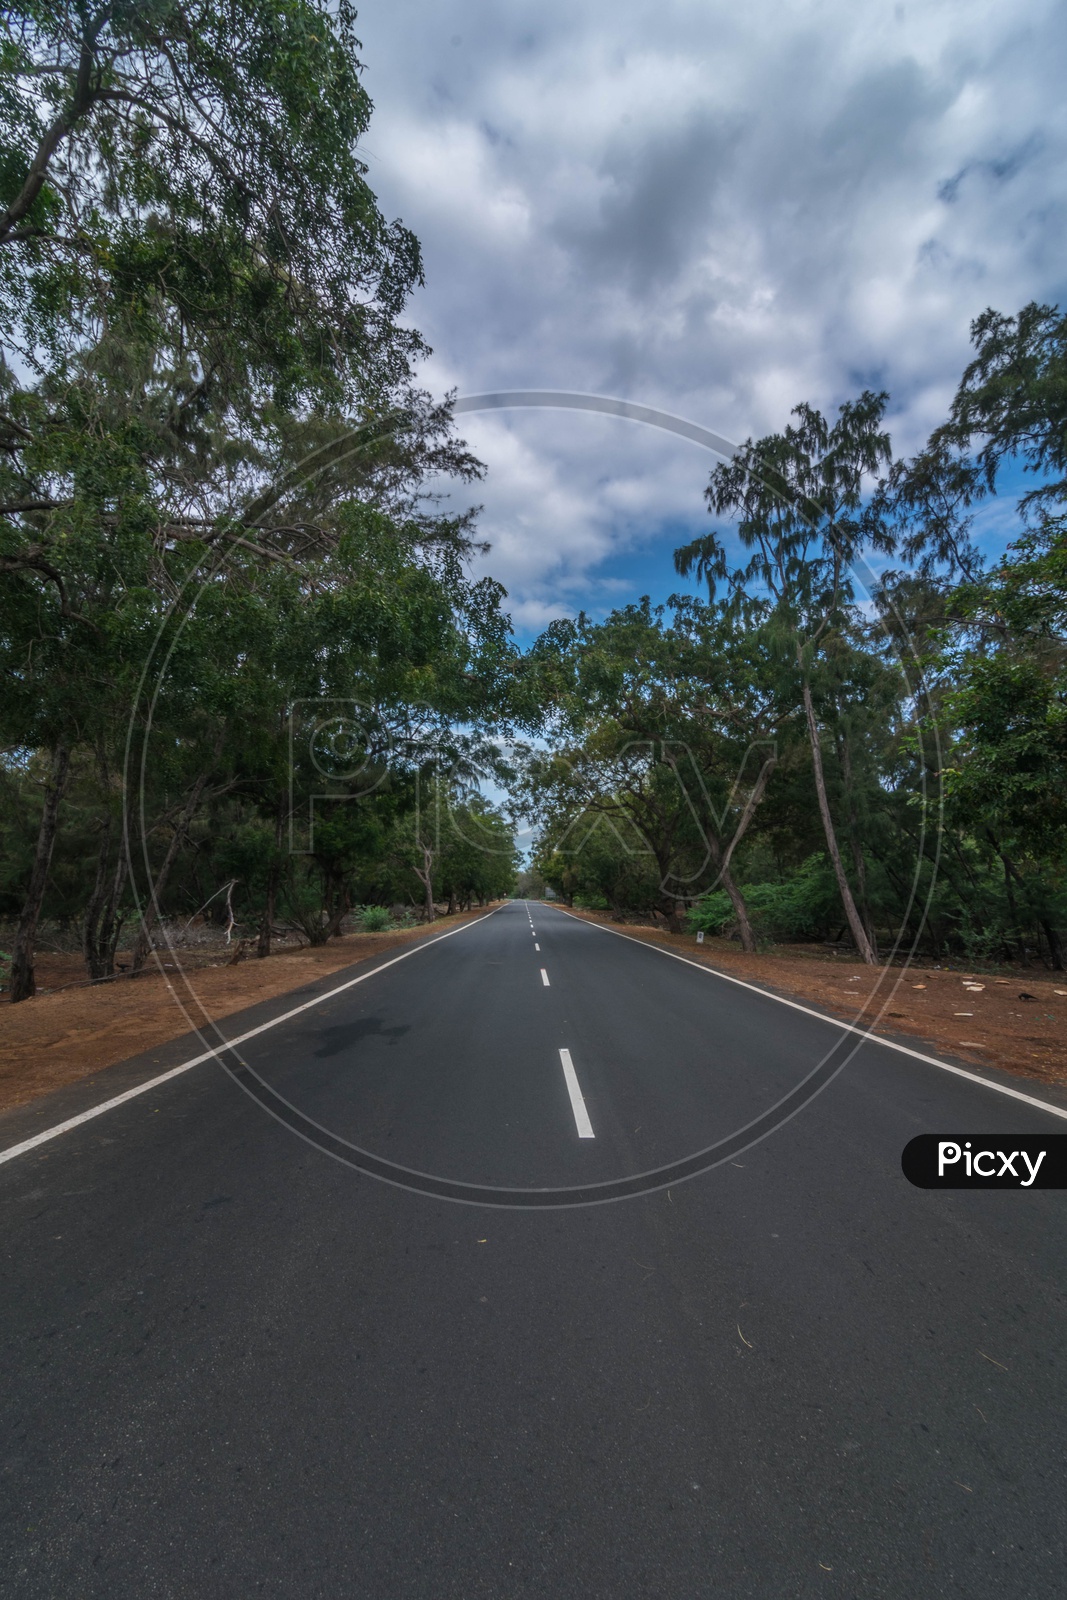 An empty roadway with trees alongside